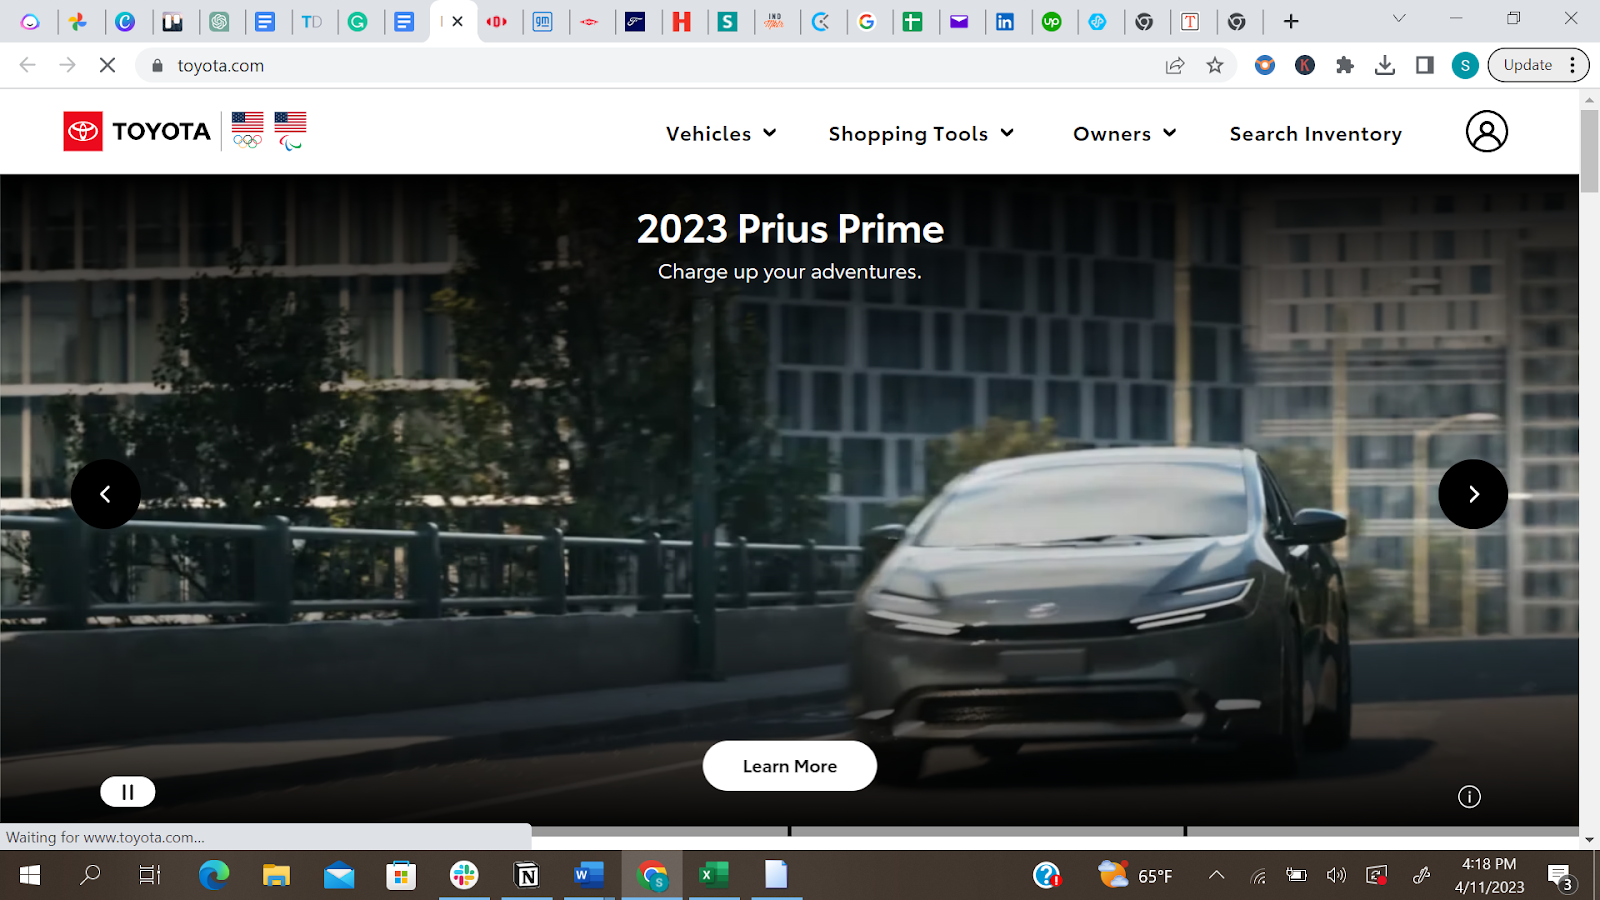 Toyota's website design